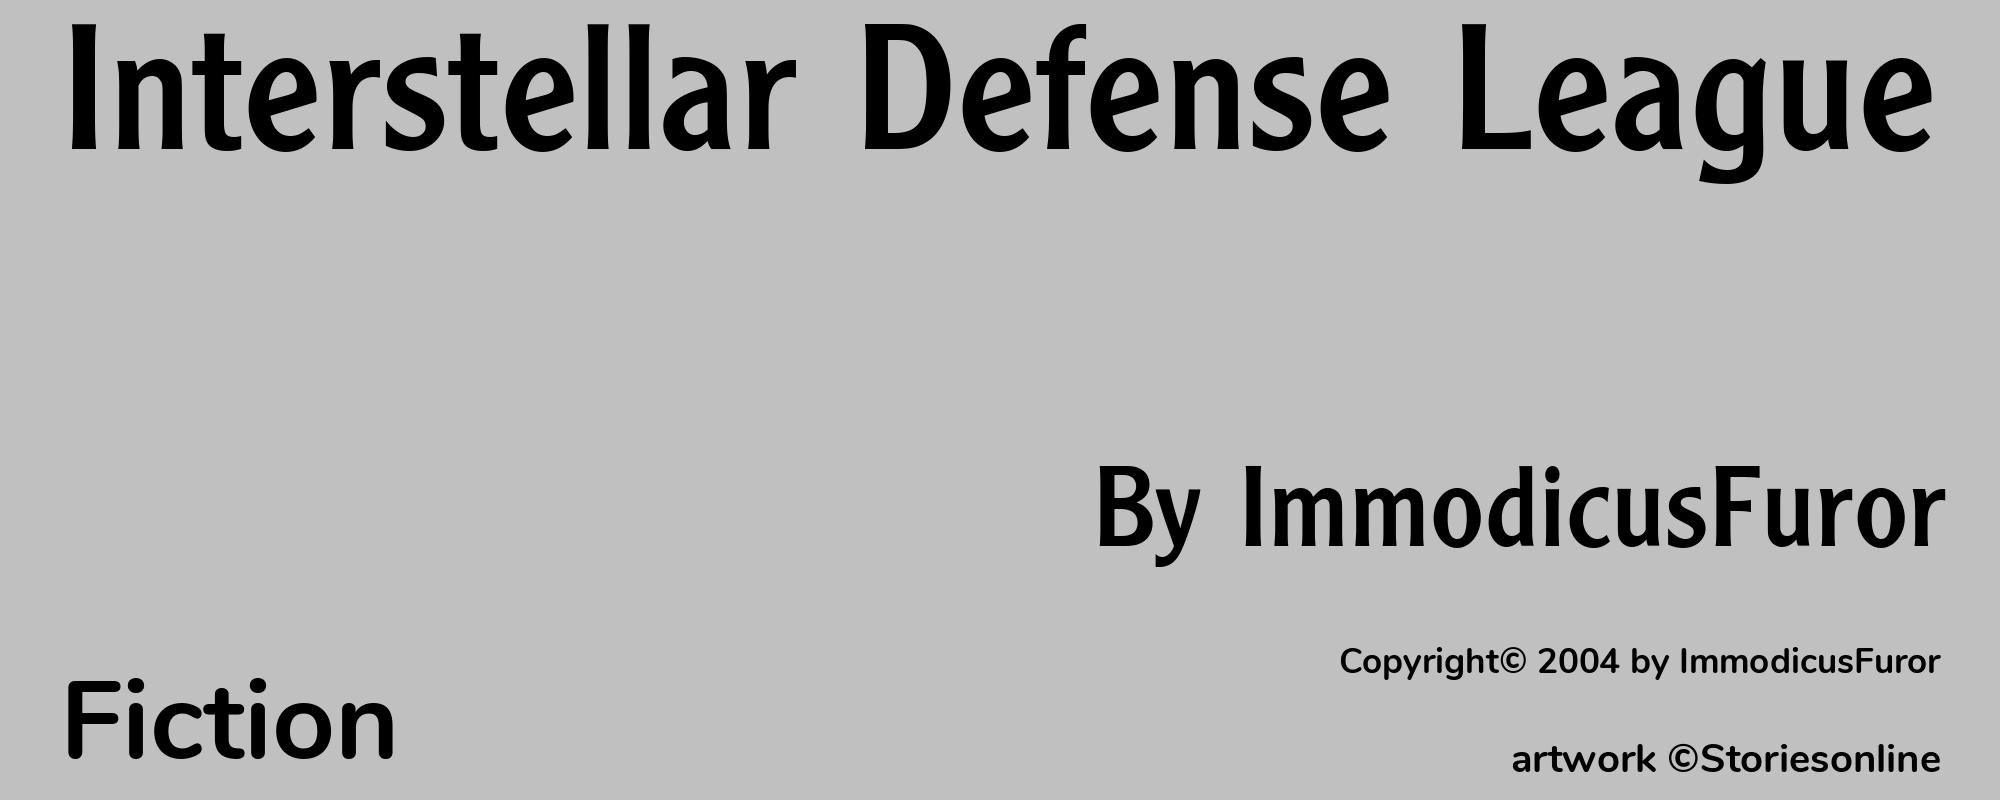 Interstellar Defense League - Cover